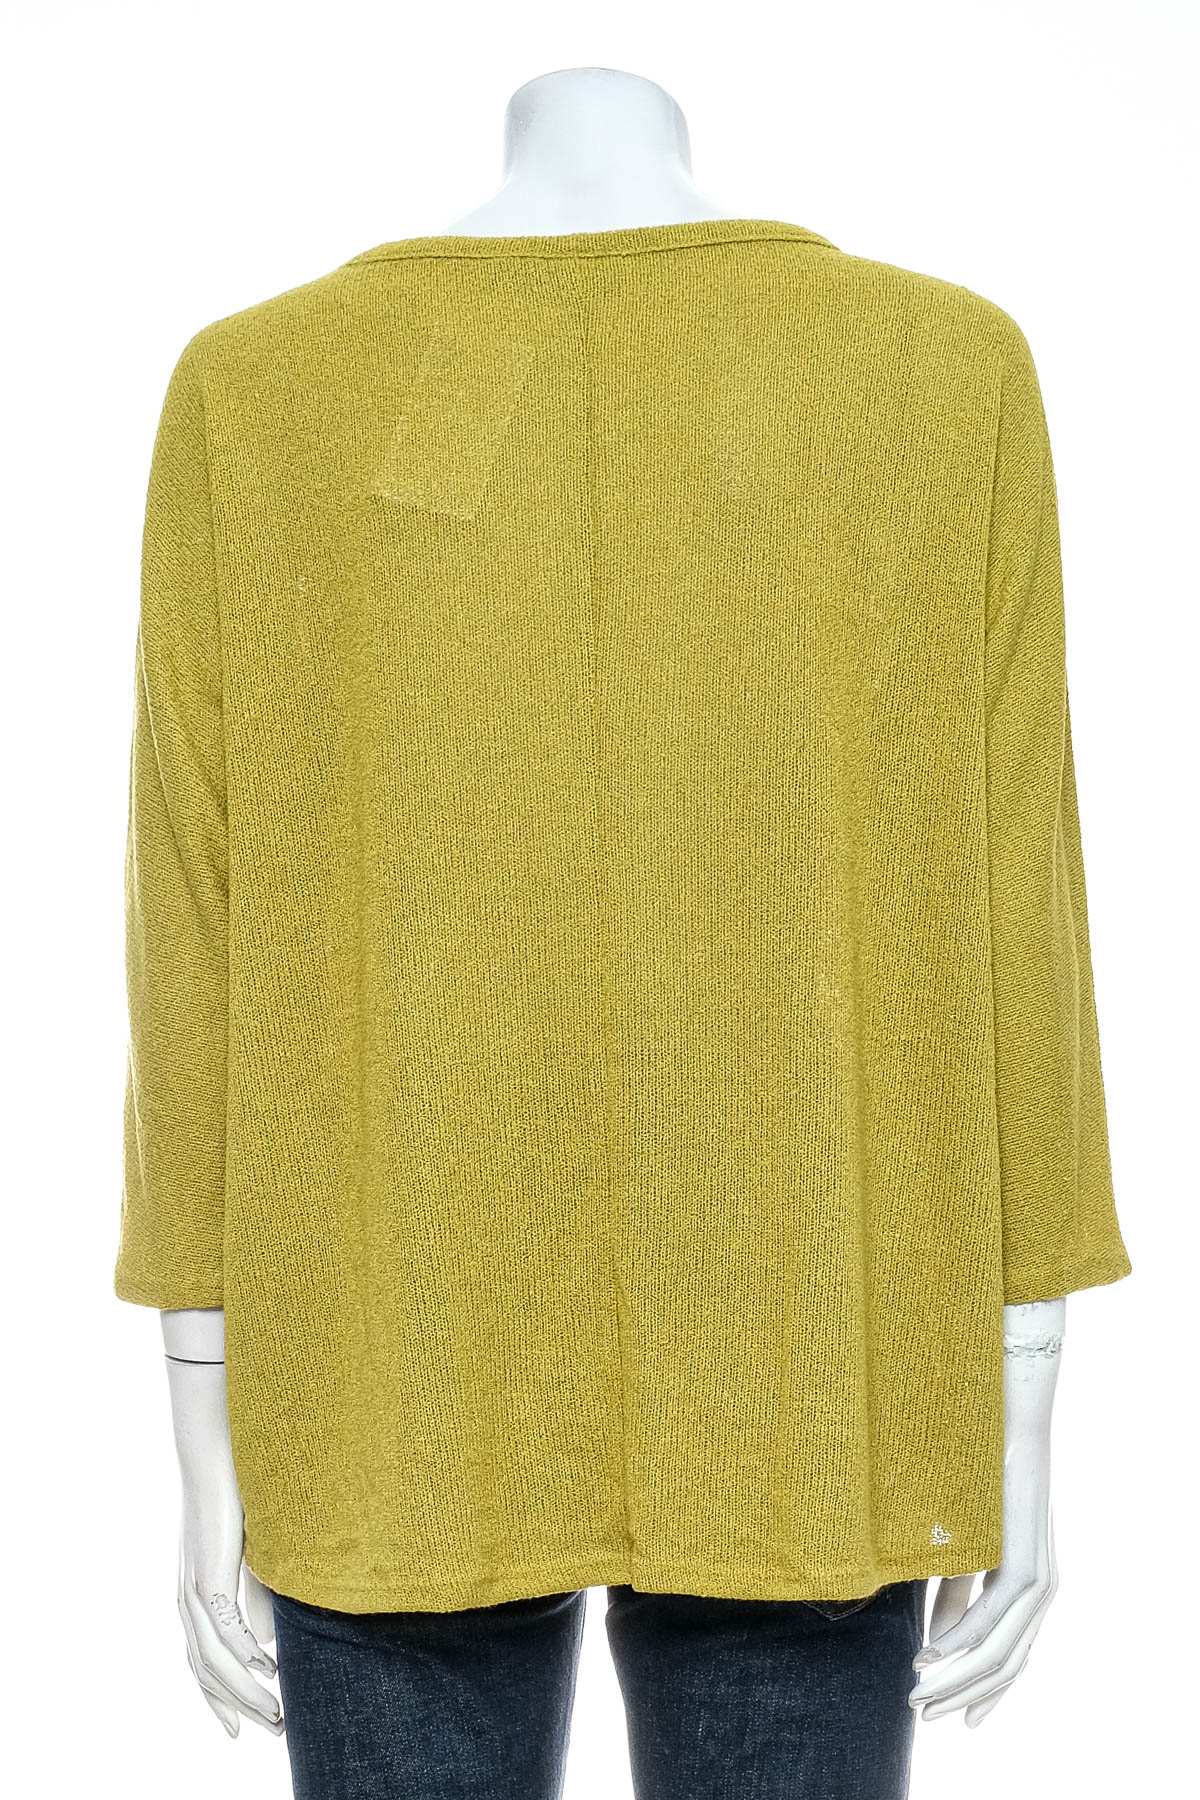 Women's sweater - Sussan - 1